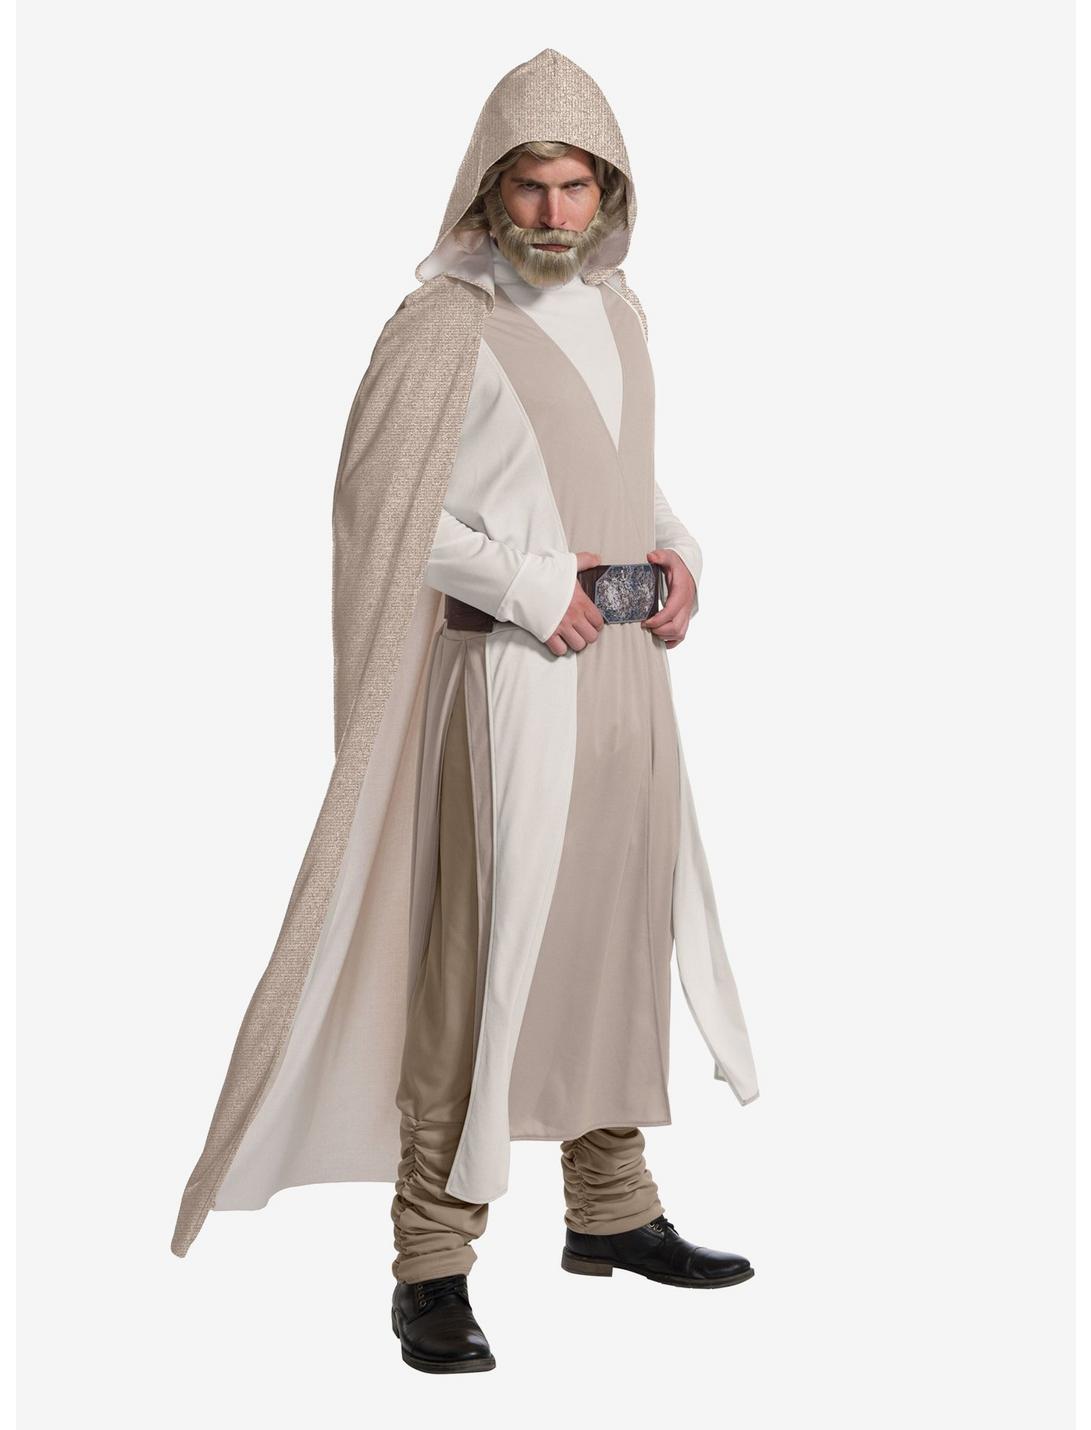 Star Wars Episode Viii Star Wars The Last Jedi Deluxe Men's Luke Skywalker Costume, MULTICOLOR, hi-res